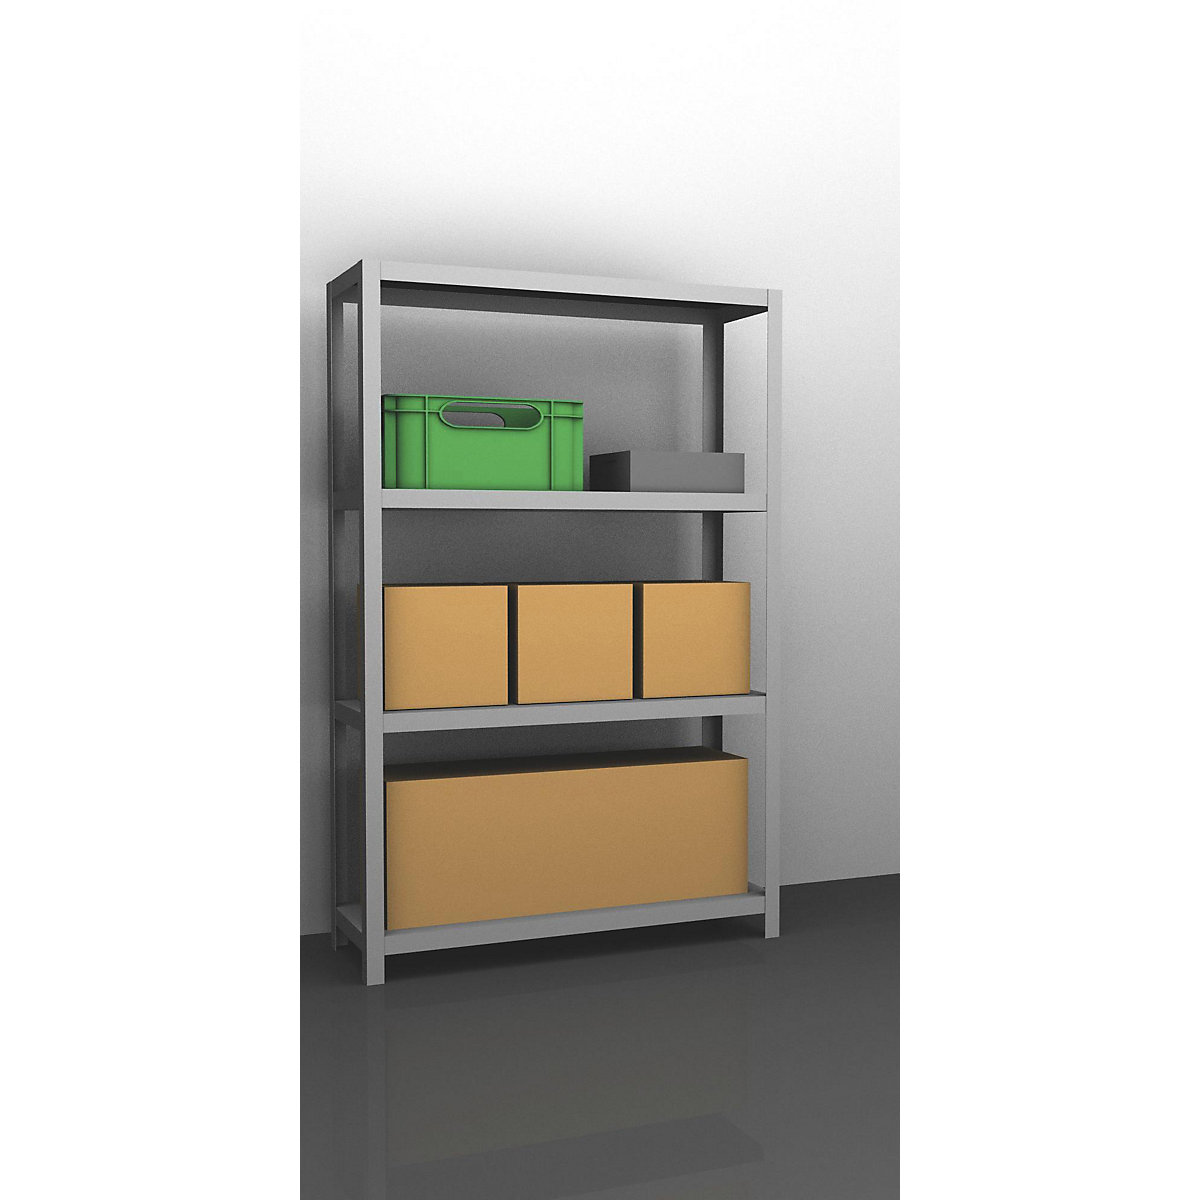 Bolt-together storage shelving, zinc plated, medium duty – eurokraft pro, shelf unit height 1500 mm, shelf width 1000 mm, depth 400 mm, standard shelf unit-3